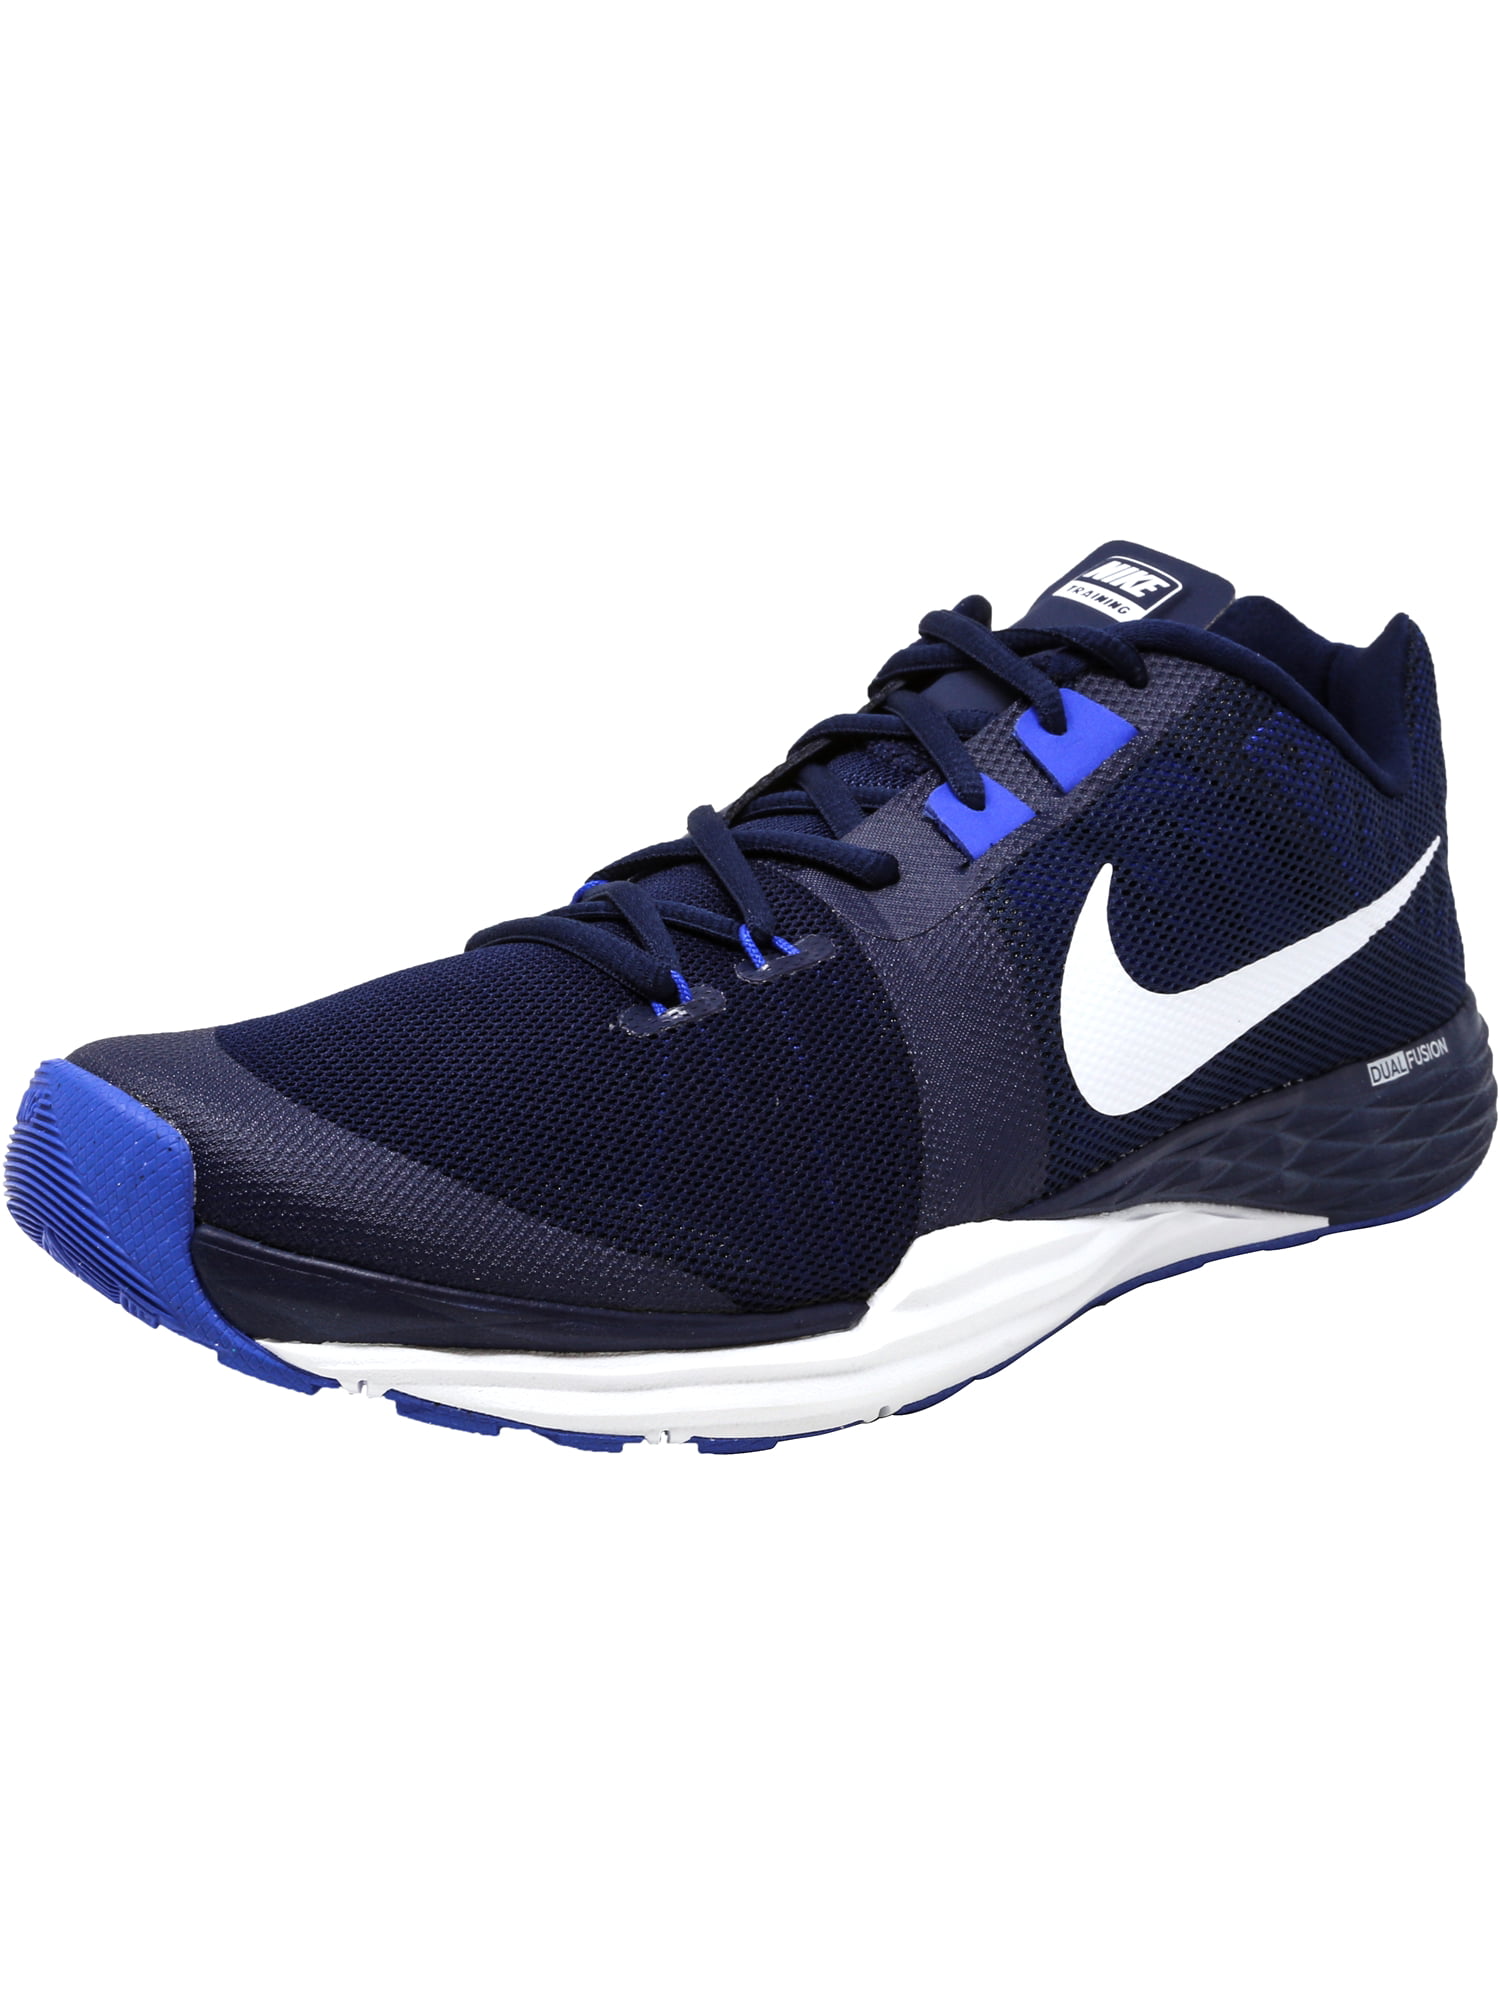 Nike Men's Train Iron Df Black/White/Anthracite/Cool Grey Ankle-High Cross Trainer Shoe - 8M - Walmart.com